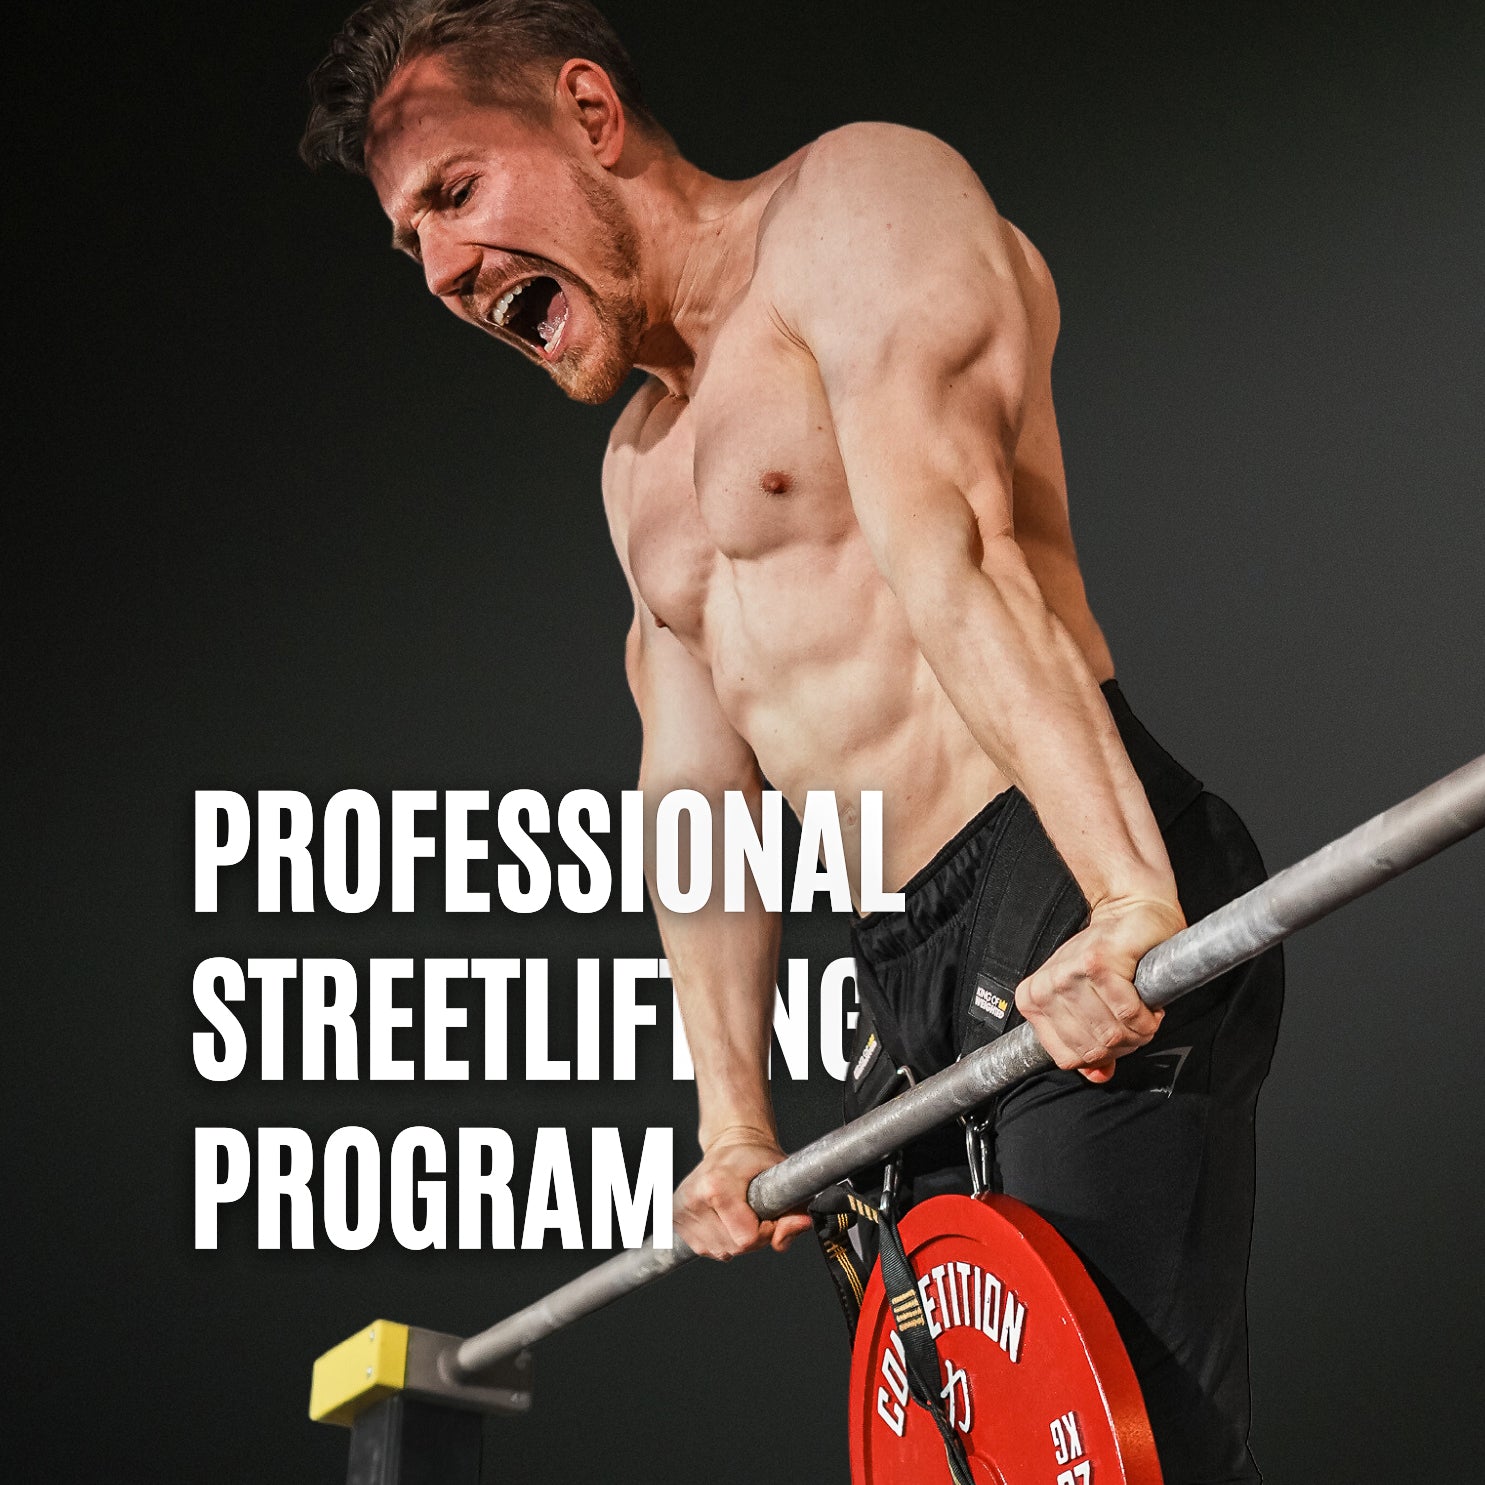 Programme professionnel de streetlifting